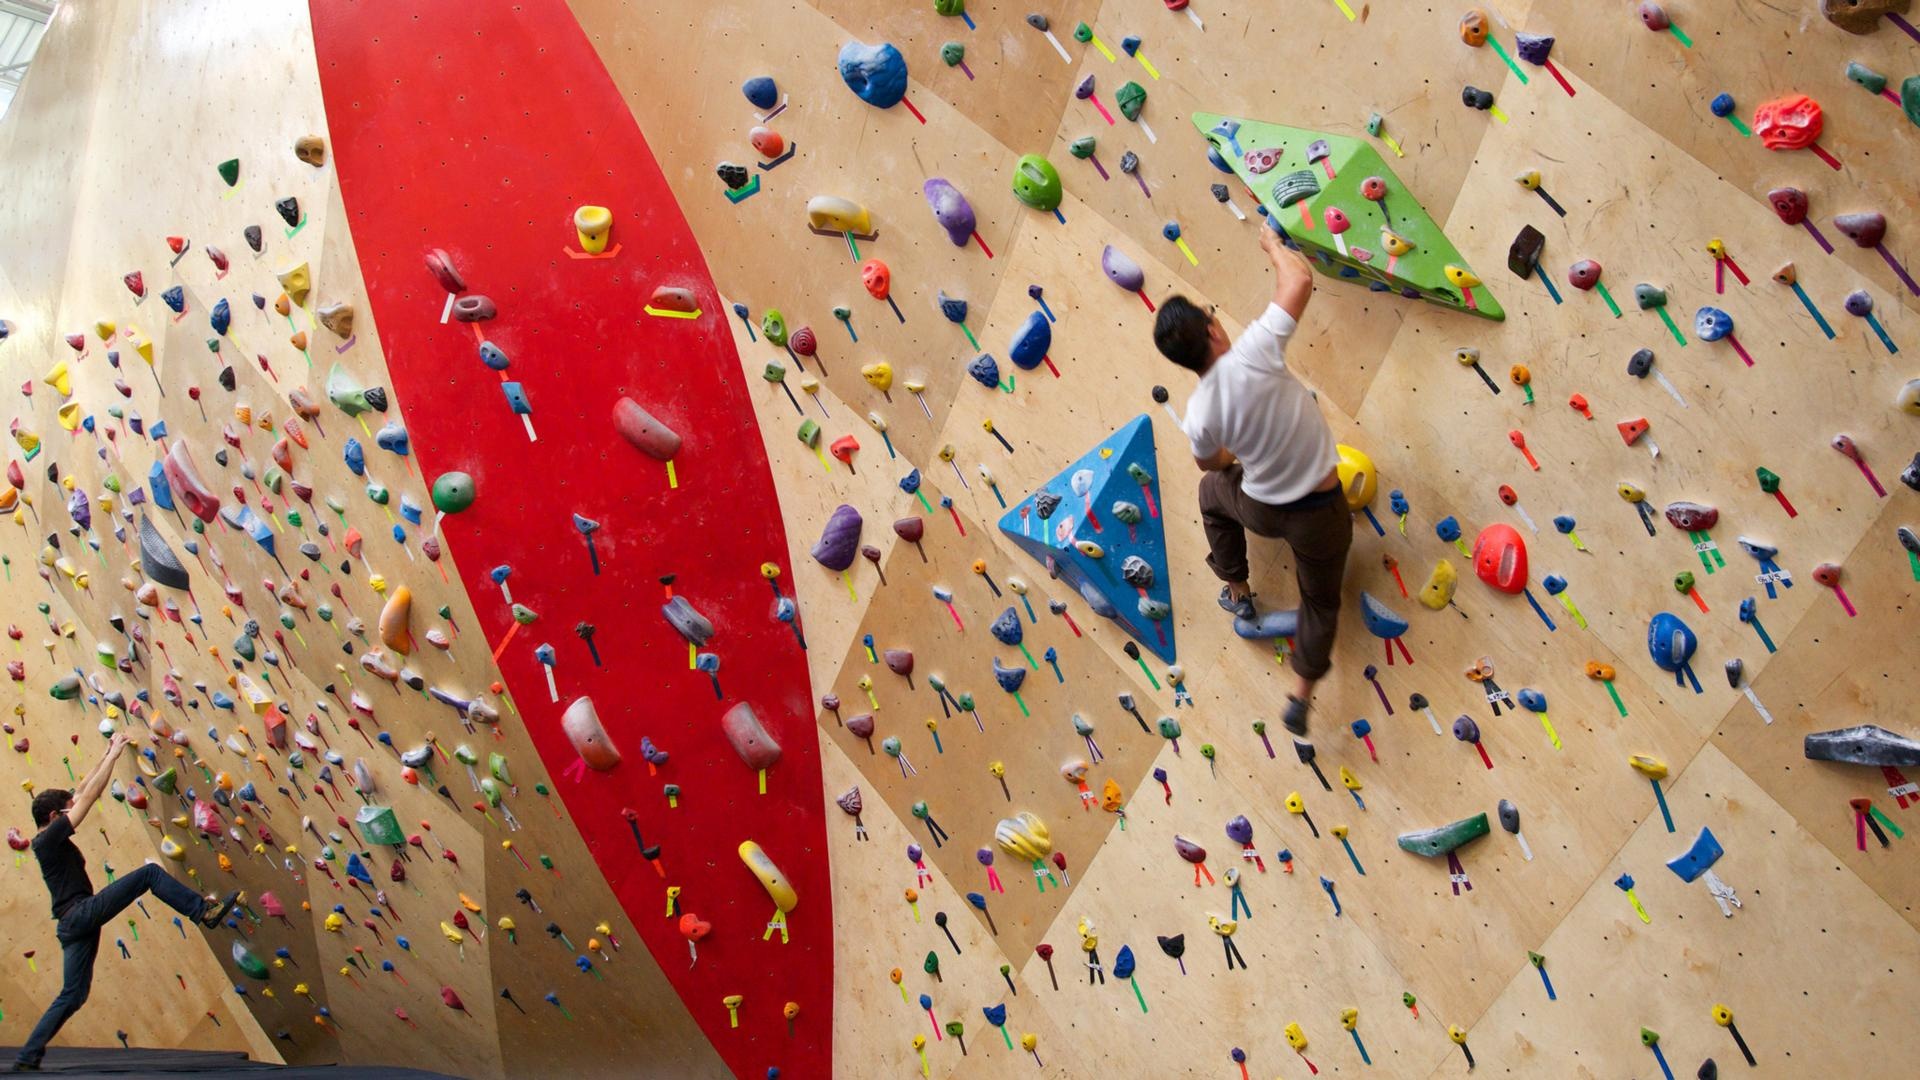 Rock Climbing: Climbing Hold, Exercise For Muscles, Walltopia Climbing Center, Bulgaria. 1920x1080 Full HD Background.